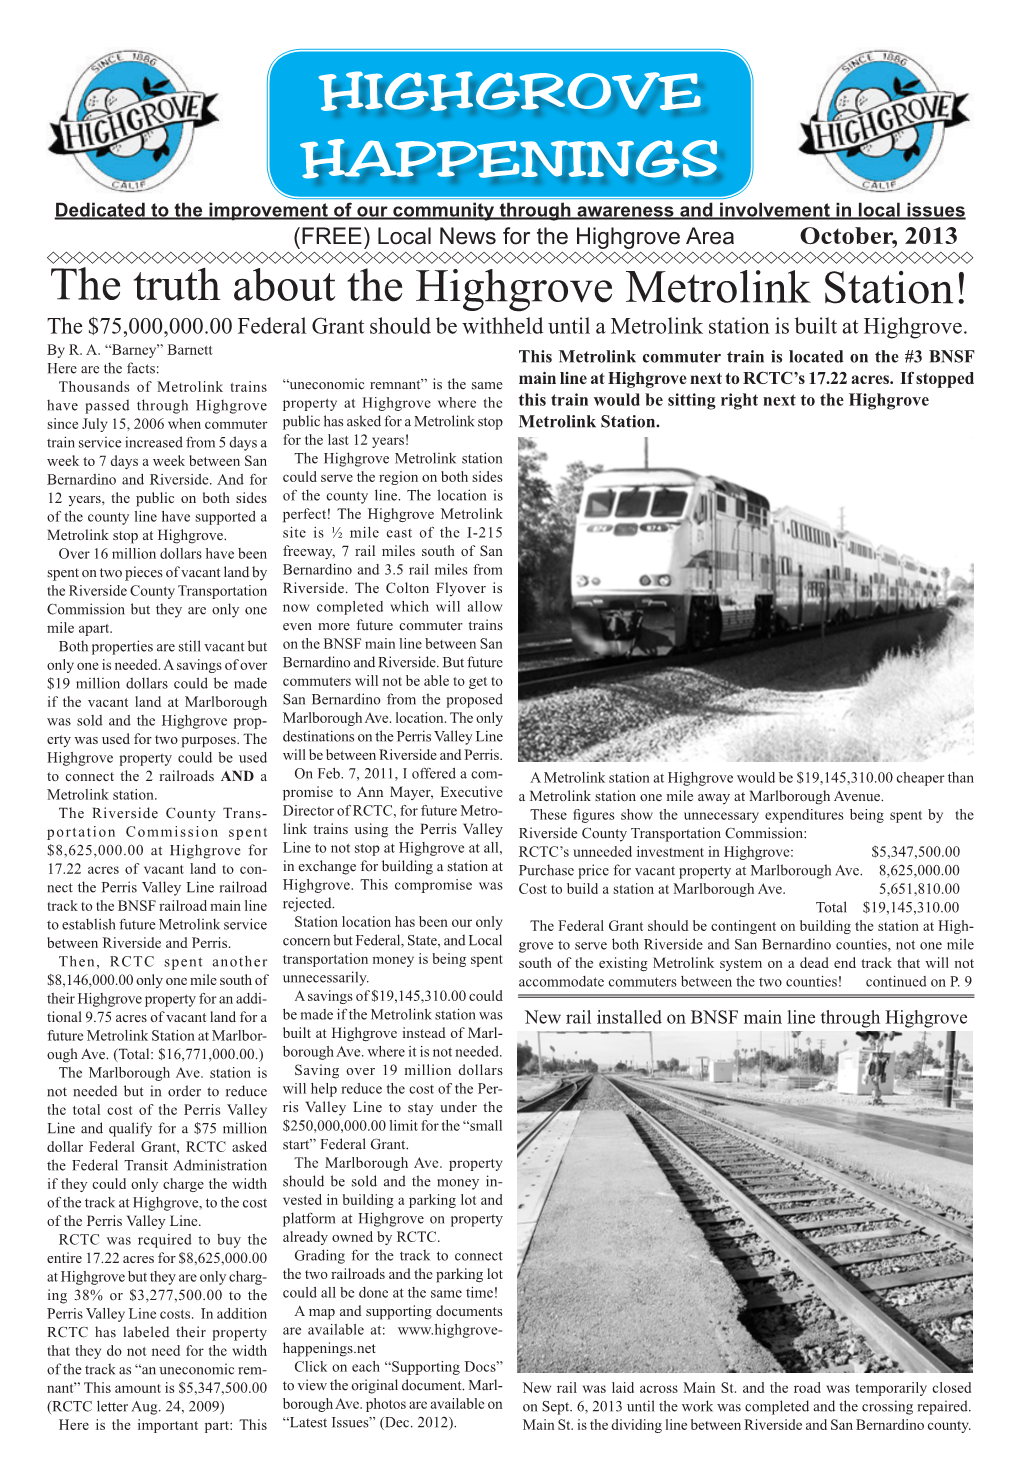 Highgrove Metrolink Station! the $75,000,000.00 Federal Grant Should Be Withheld Until a Metrolink Station Is Built at Highgrove